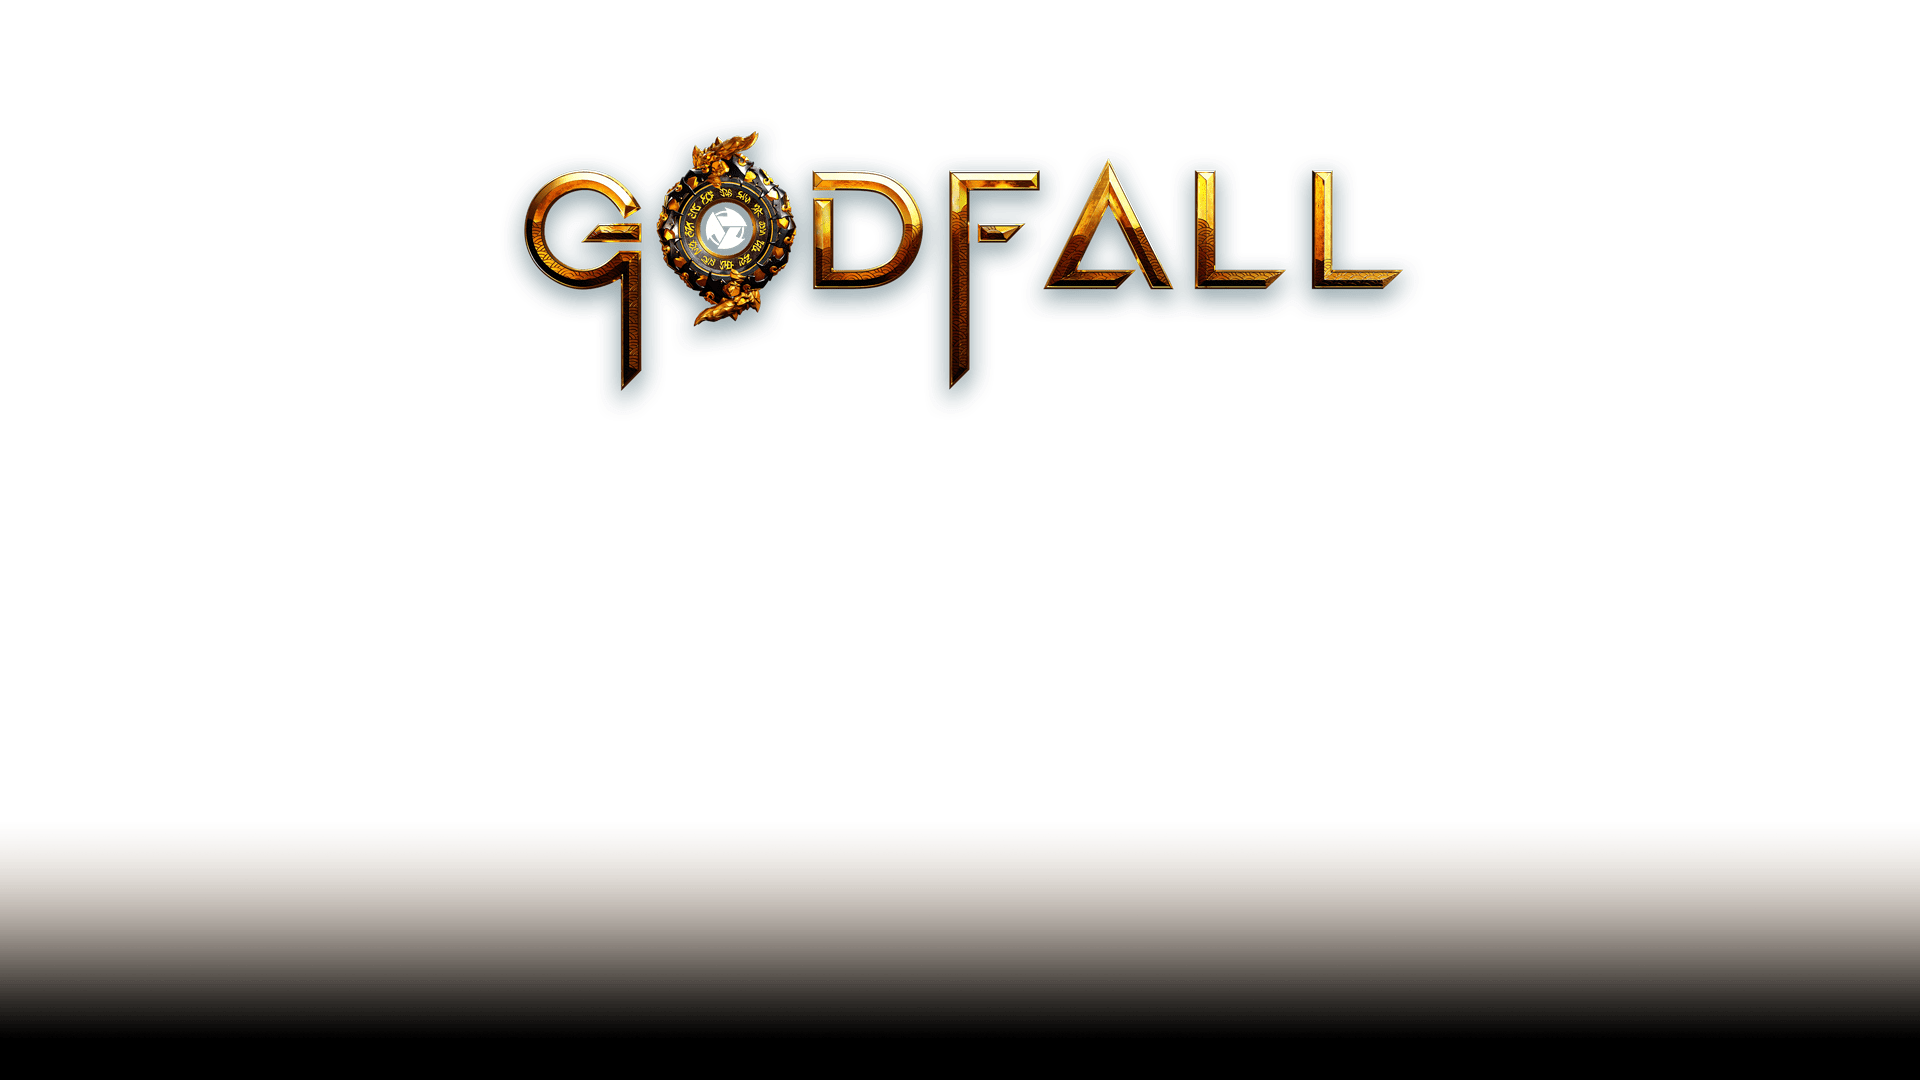 720p godfall backgrounds